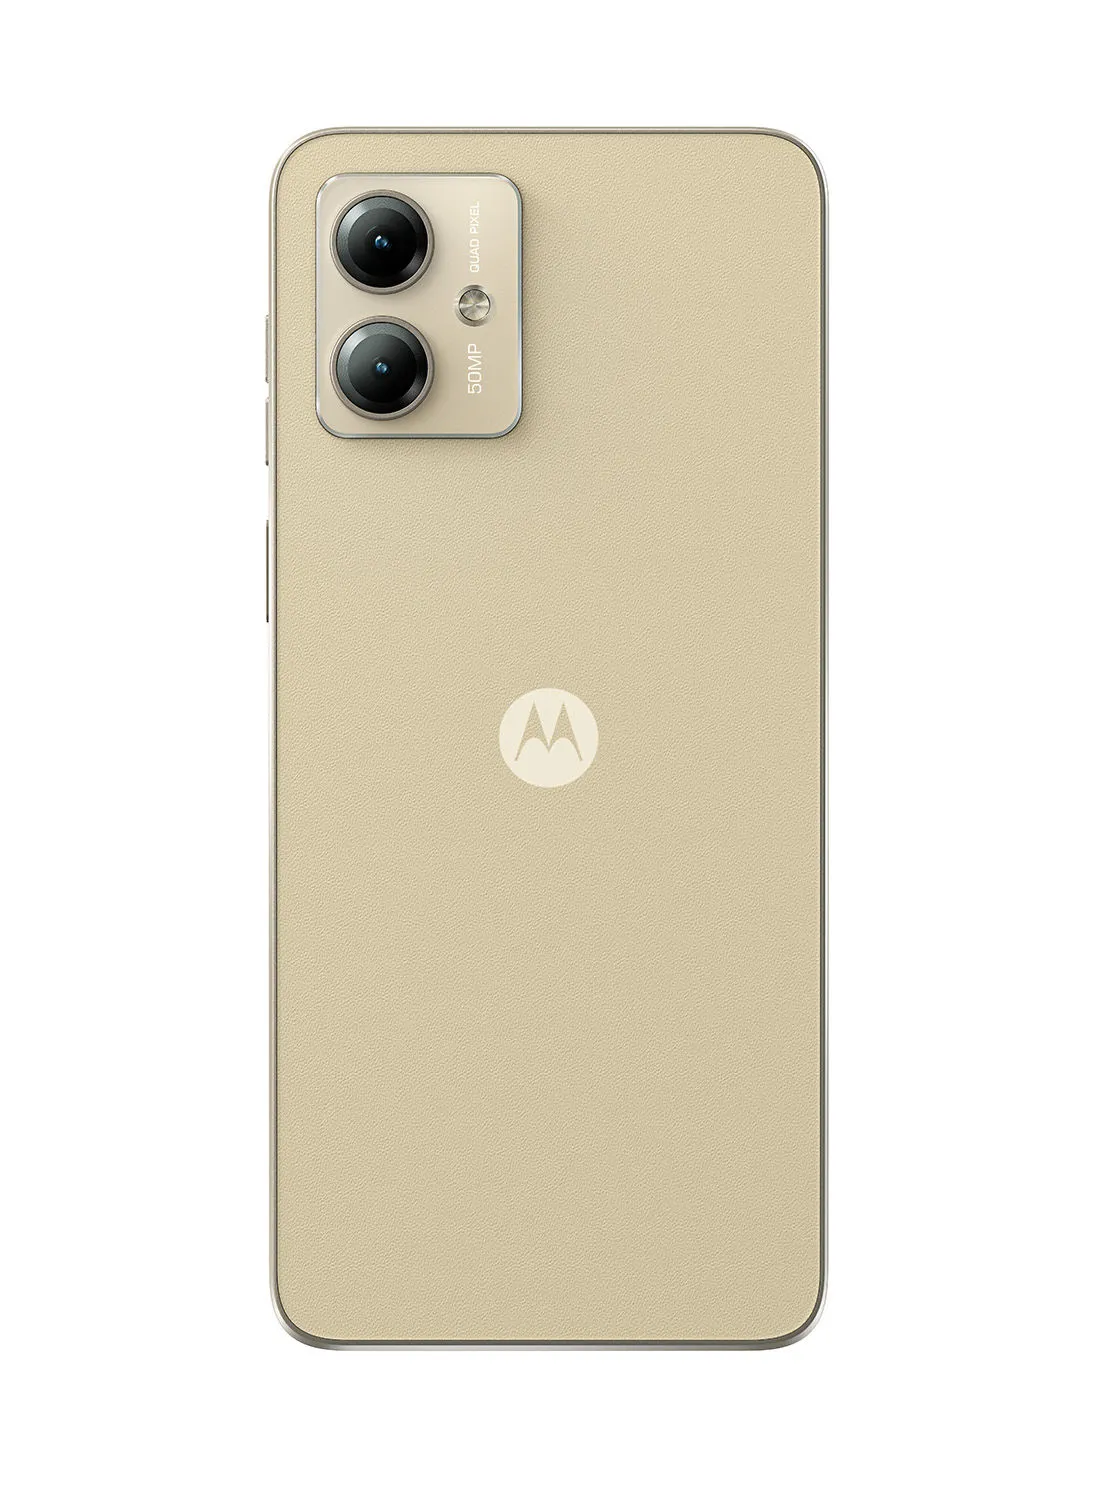 Motorola G14 Dual SIM Butter-Cream 4GB RAM 128GB 4G - Middle East Version